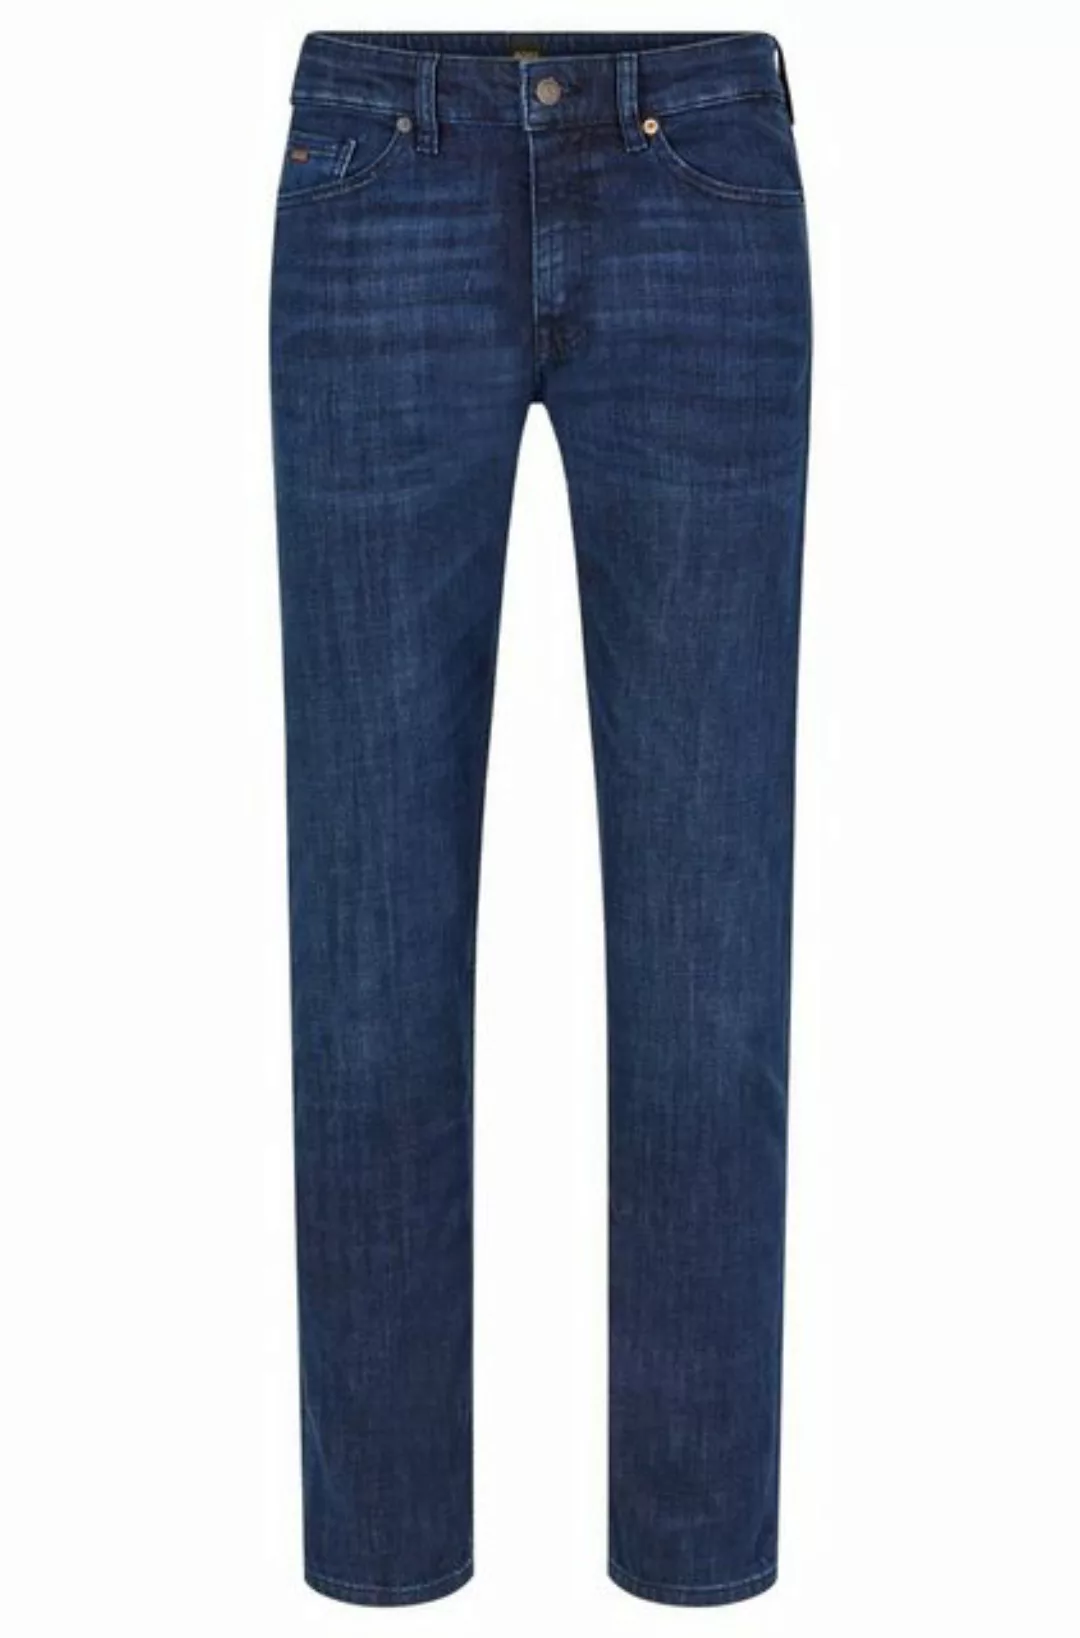 BOSS Delaware Jeans Navy - Größe W 36 - L 34 günstig online kaufen